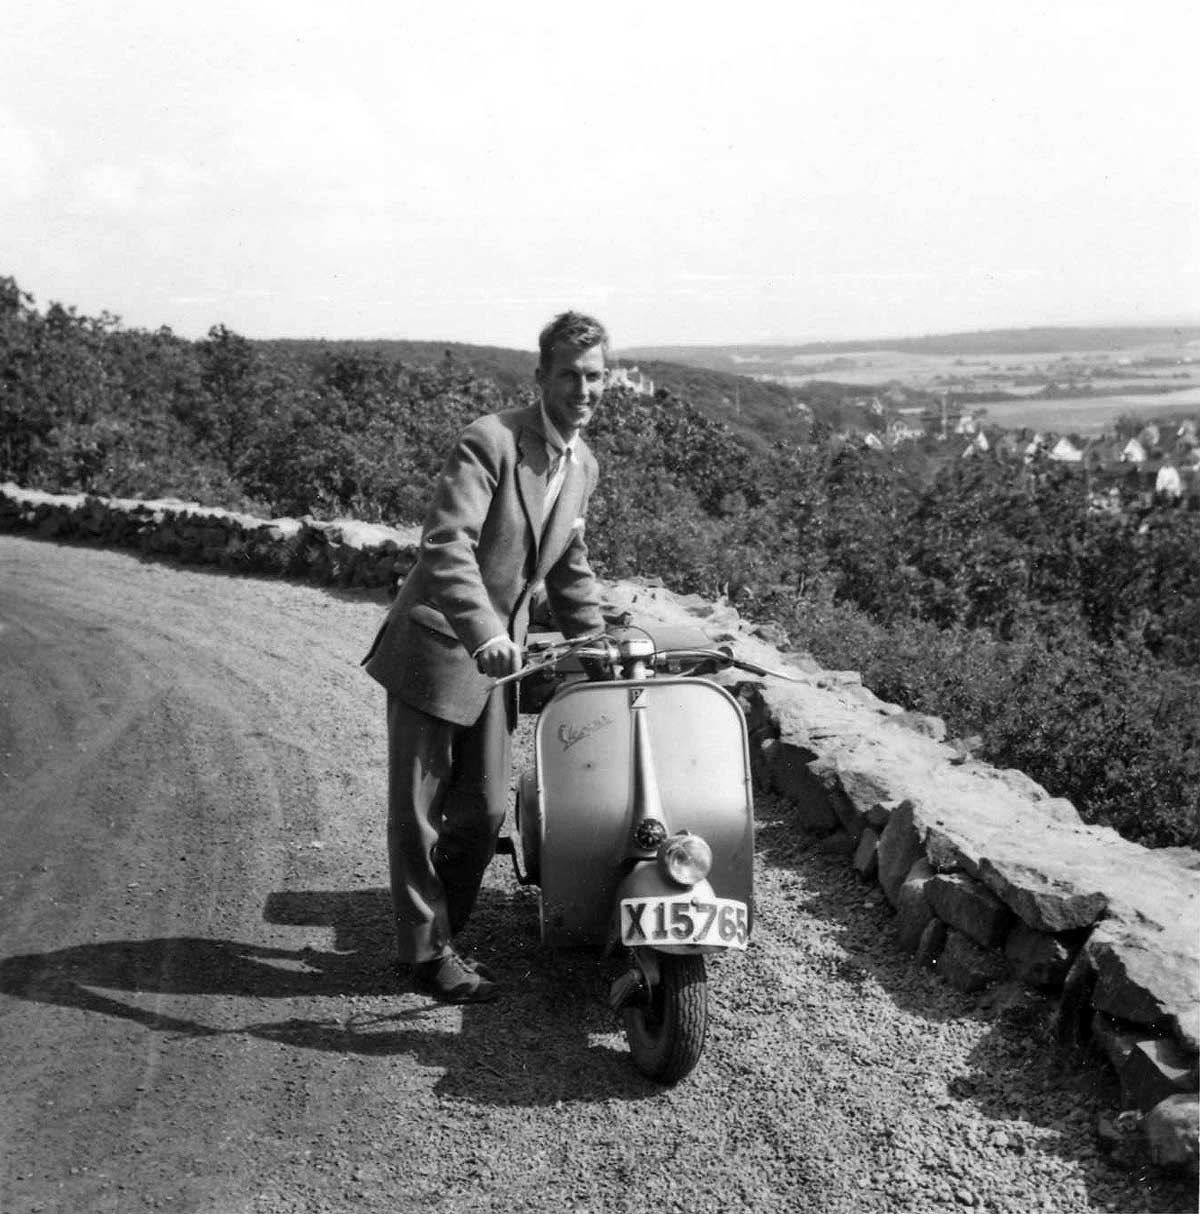 Bröllopsresa på vespa, 1957